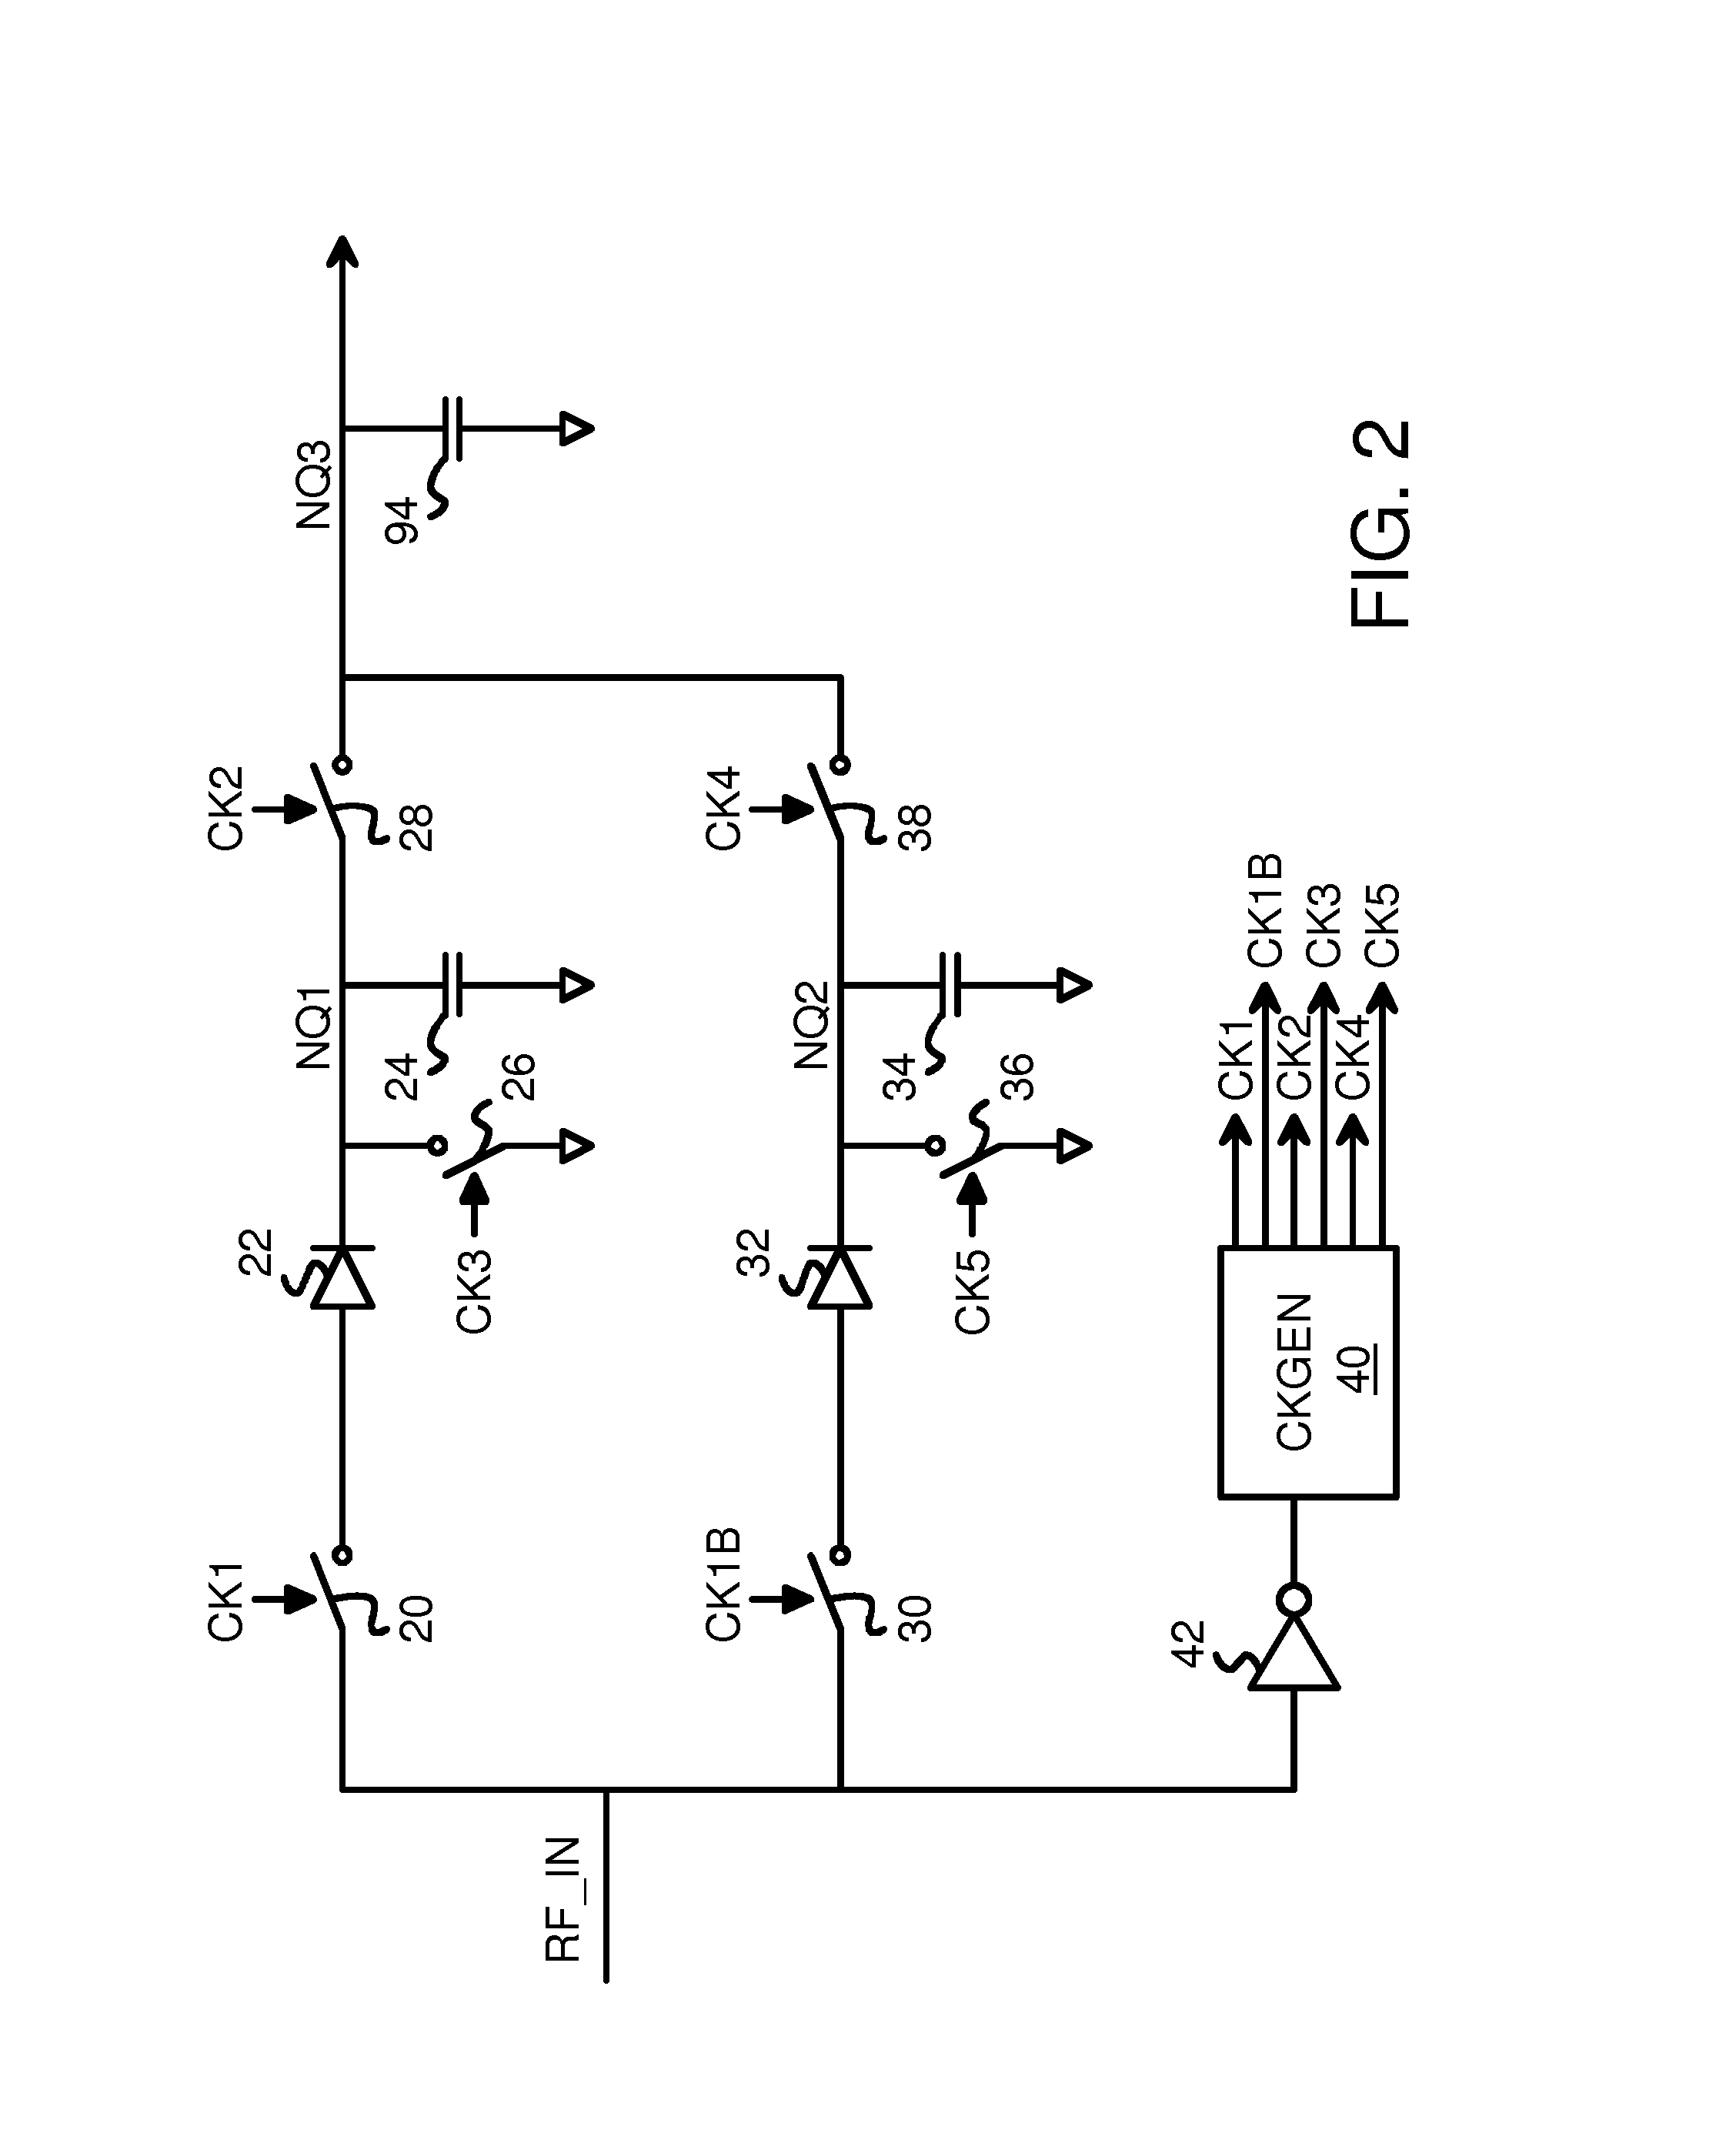 Amplitude-shift-keying (ASK) envelope detector and demodulation circuits